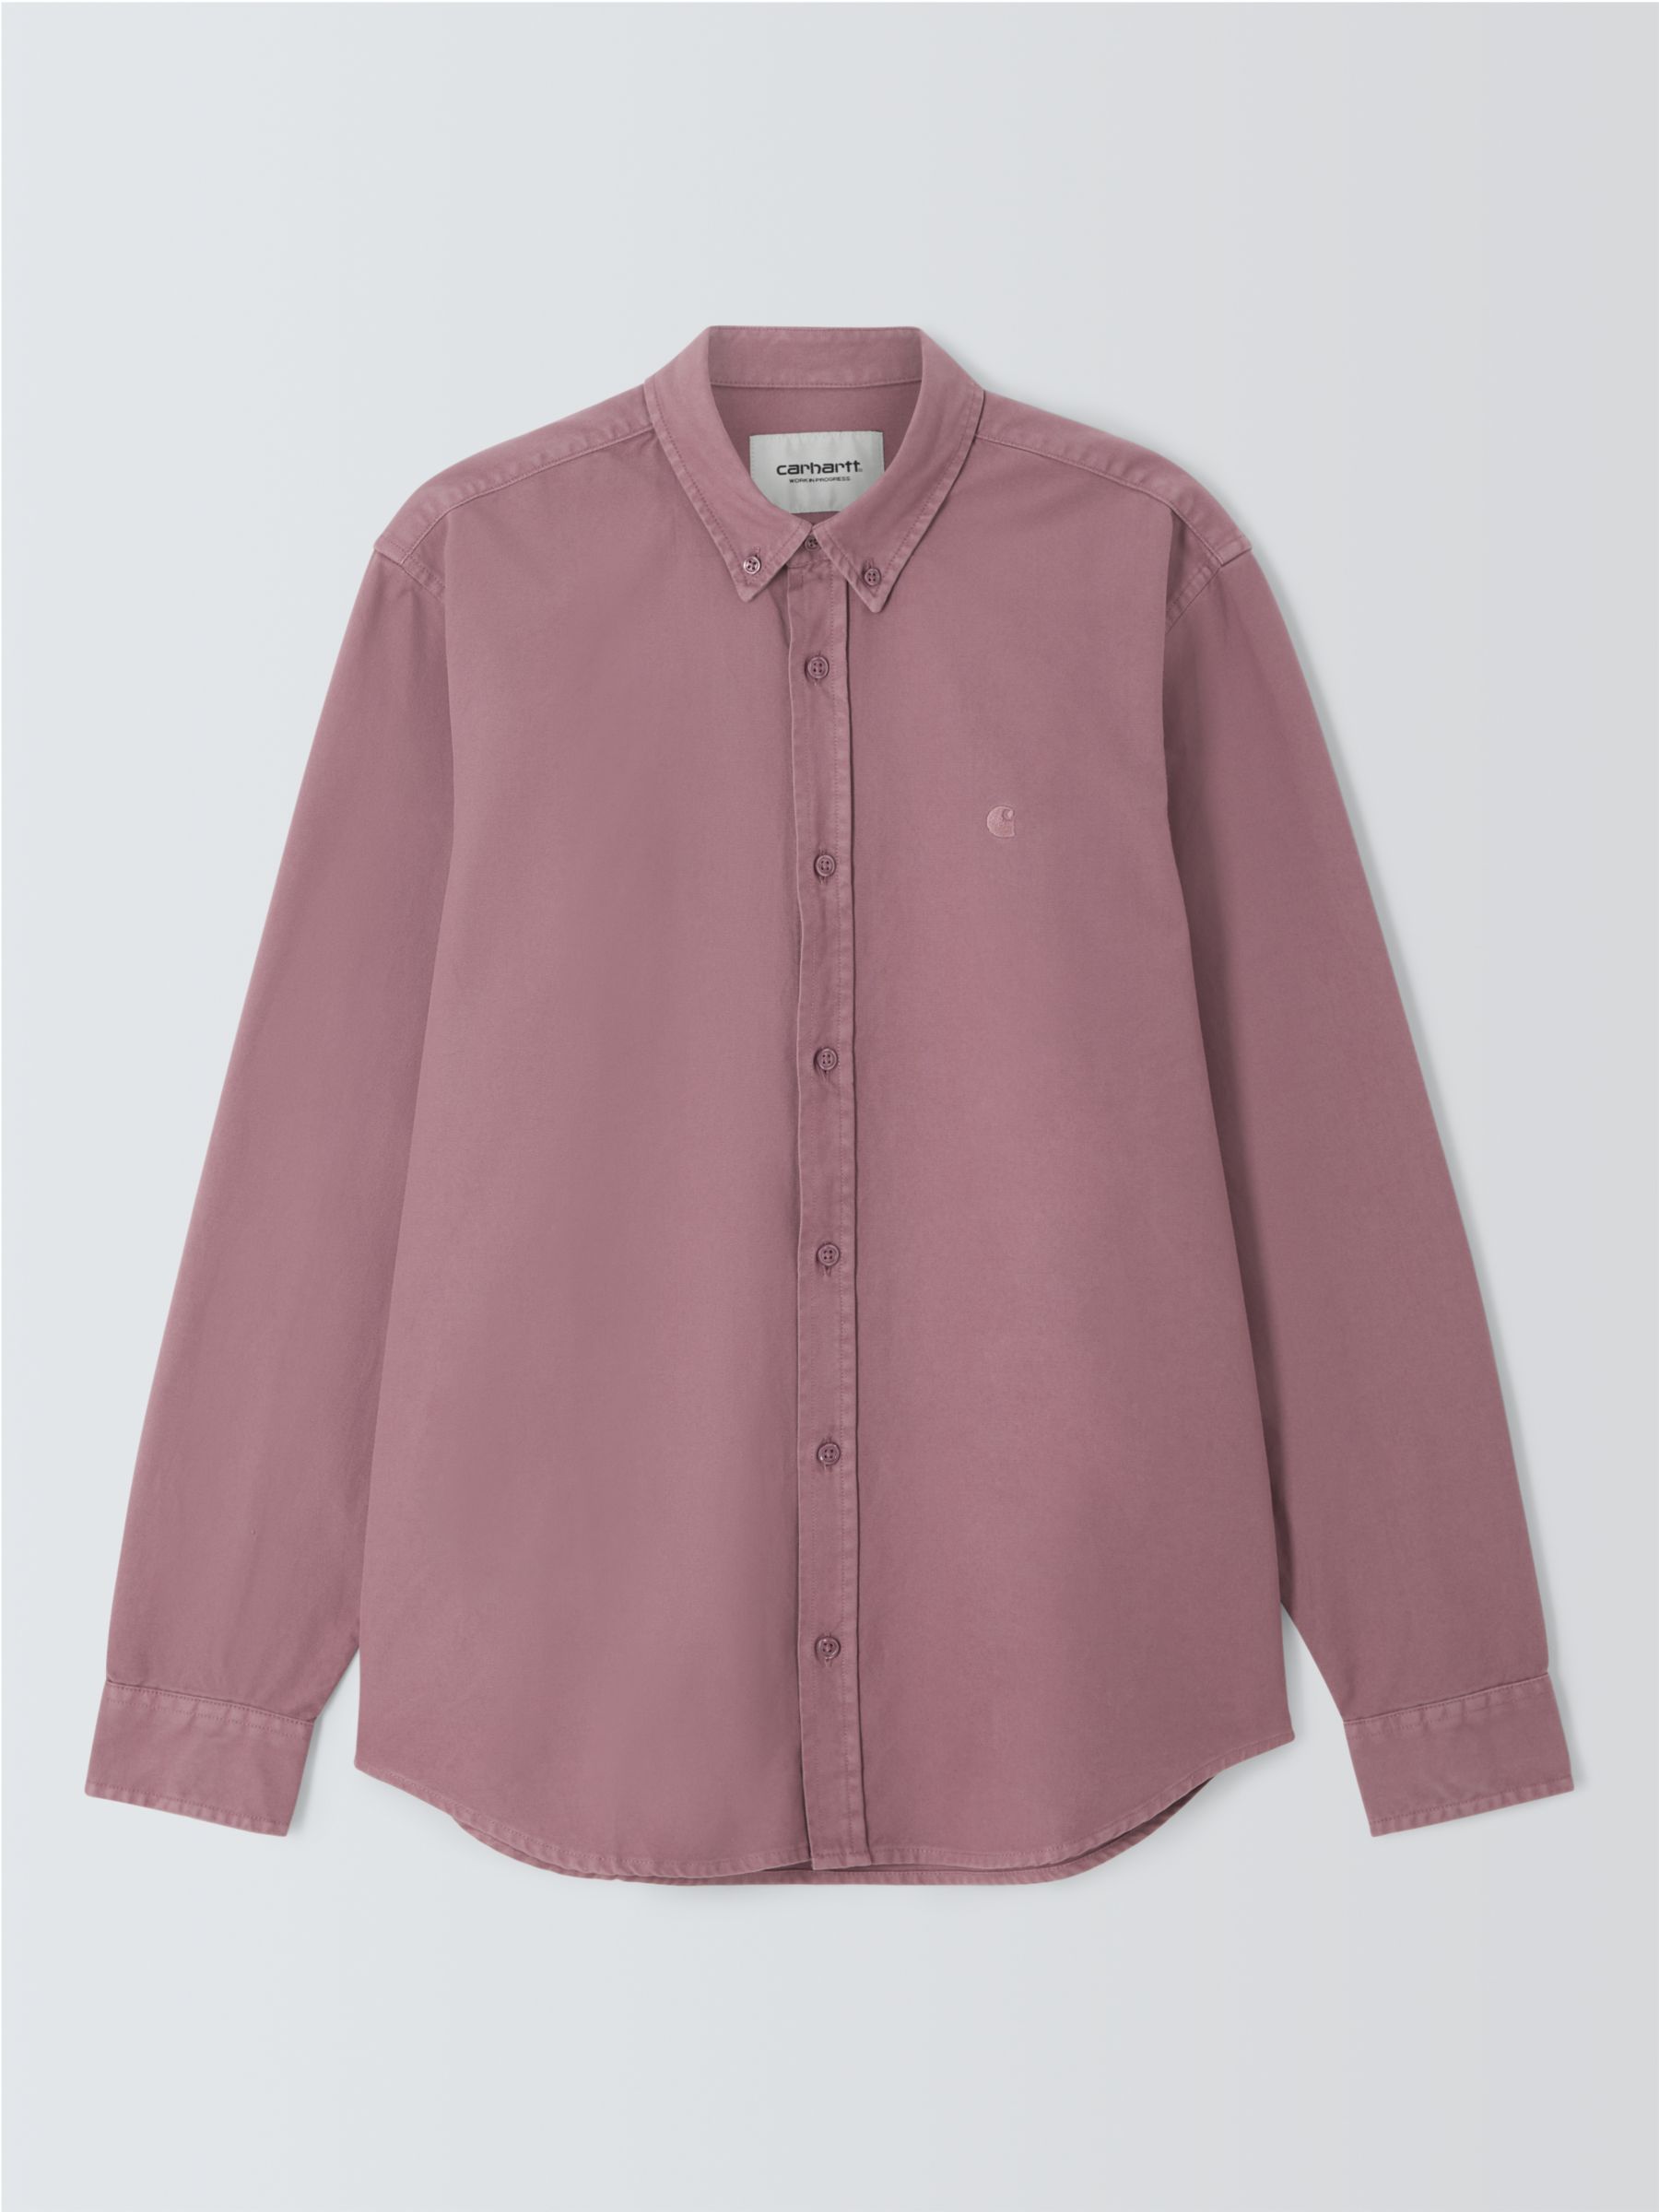 Carhartt WIP Cotton Oxford Shirt, Daphne, S